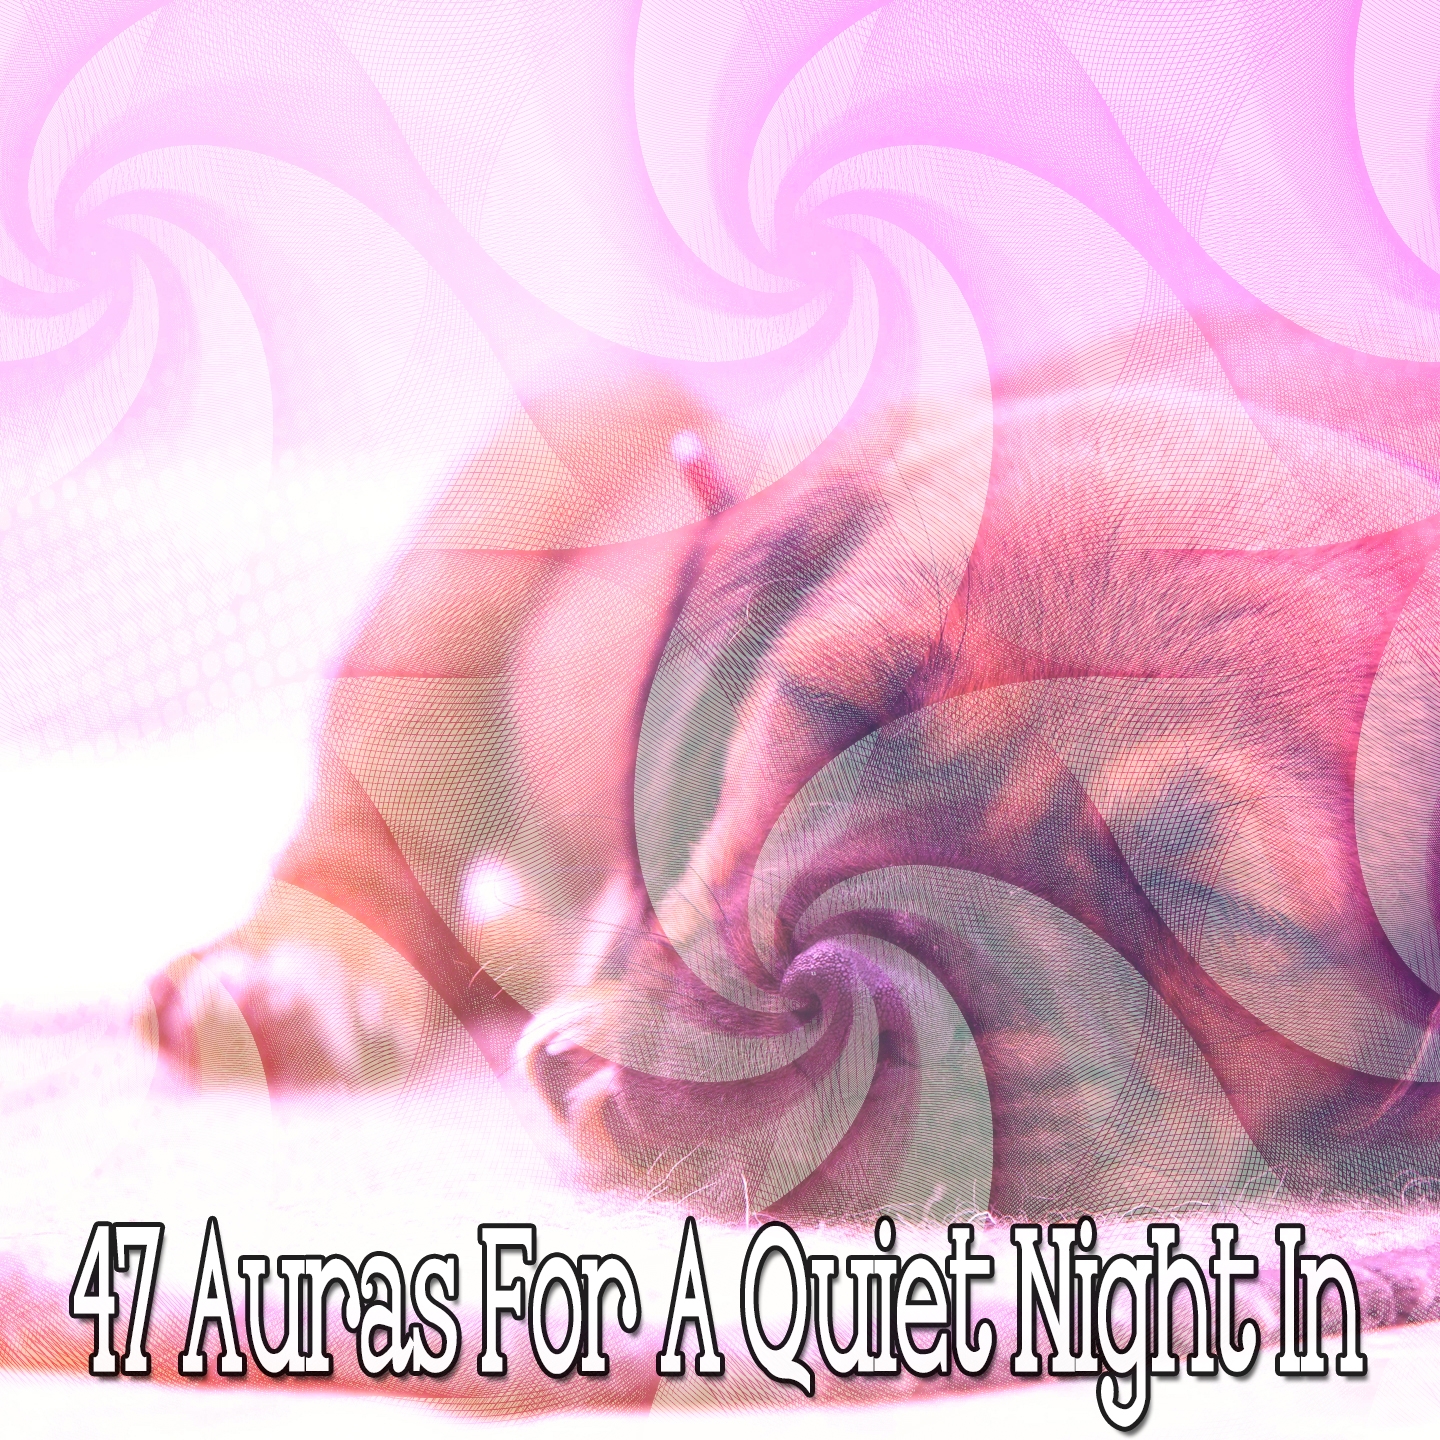 47 Auras For A Quiet Night In